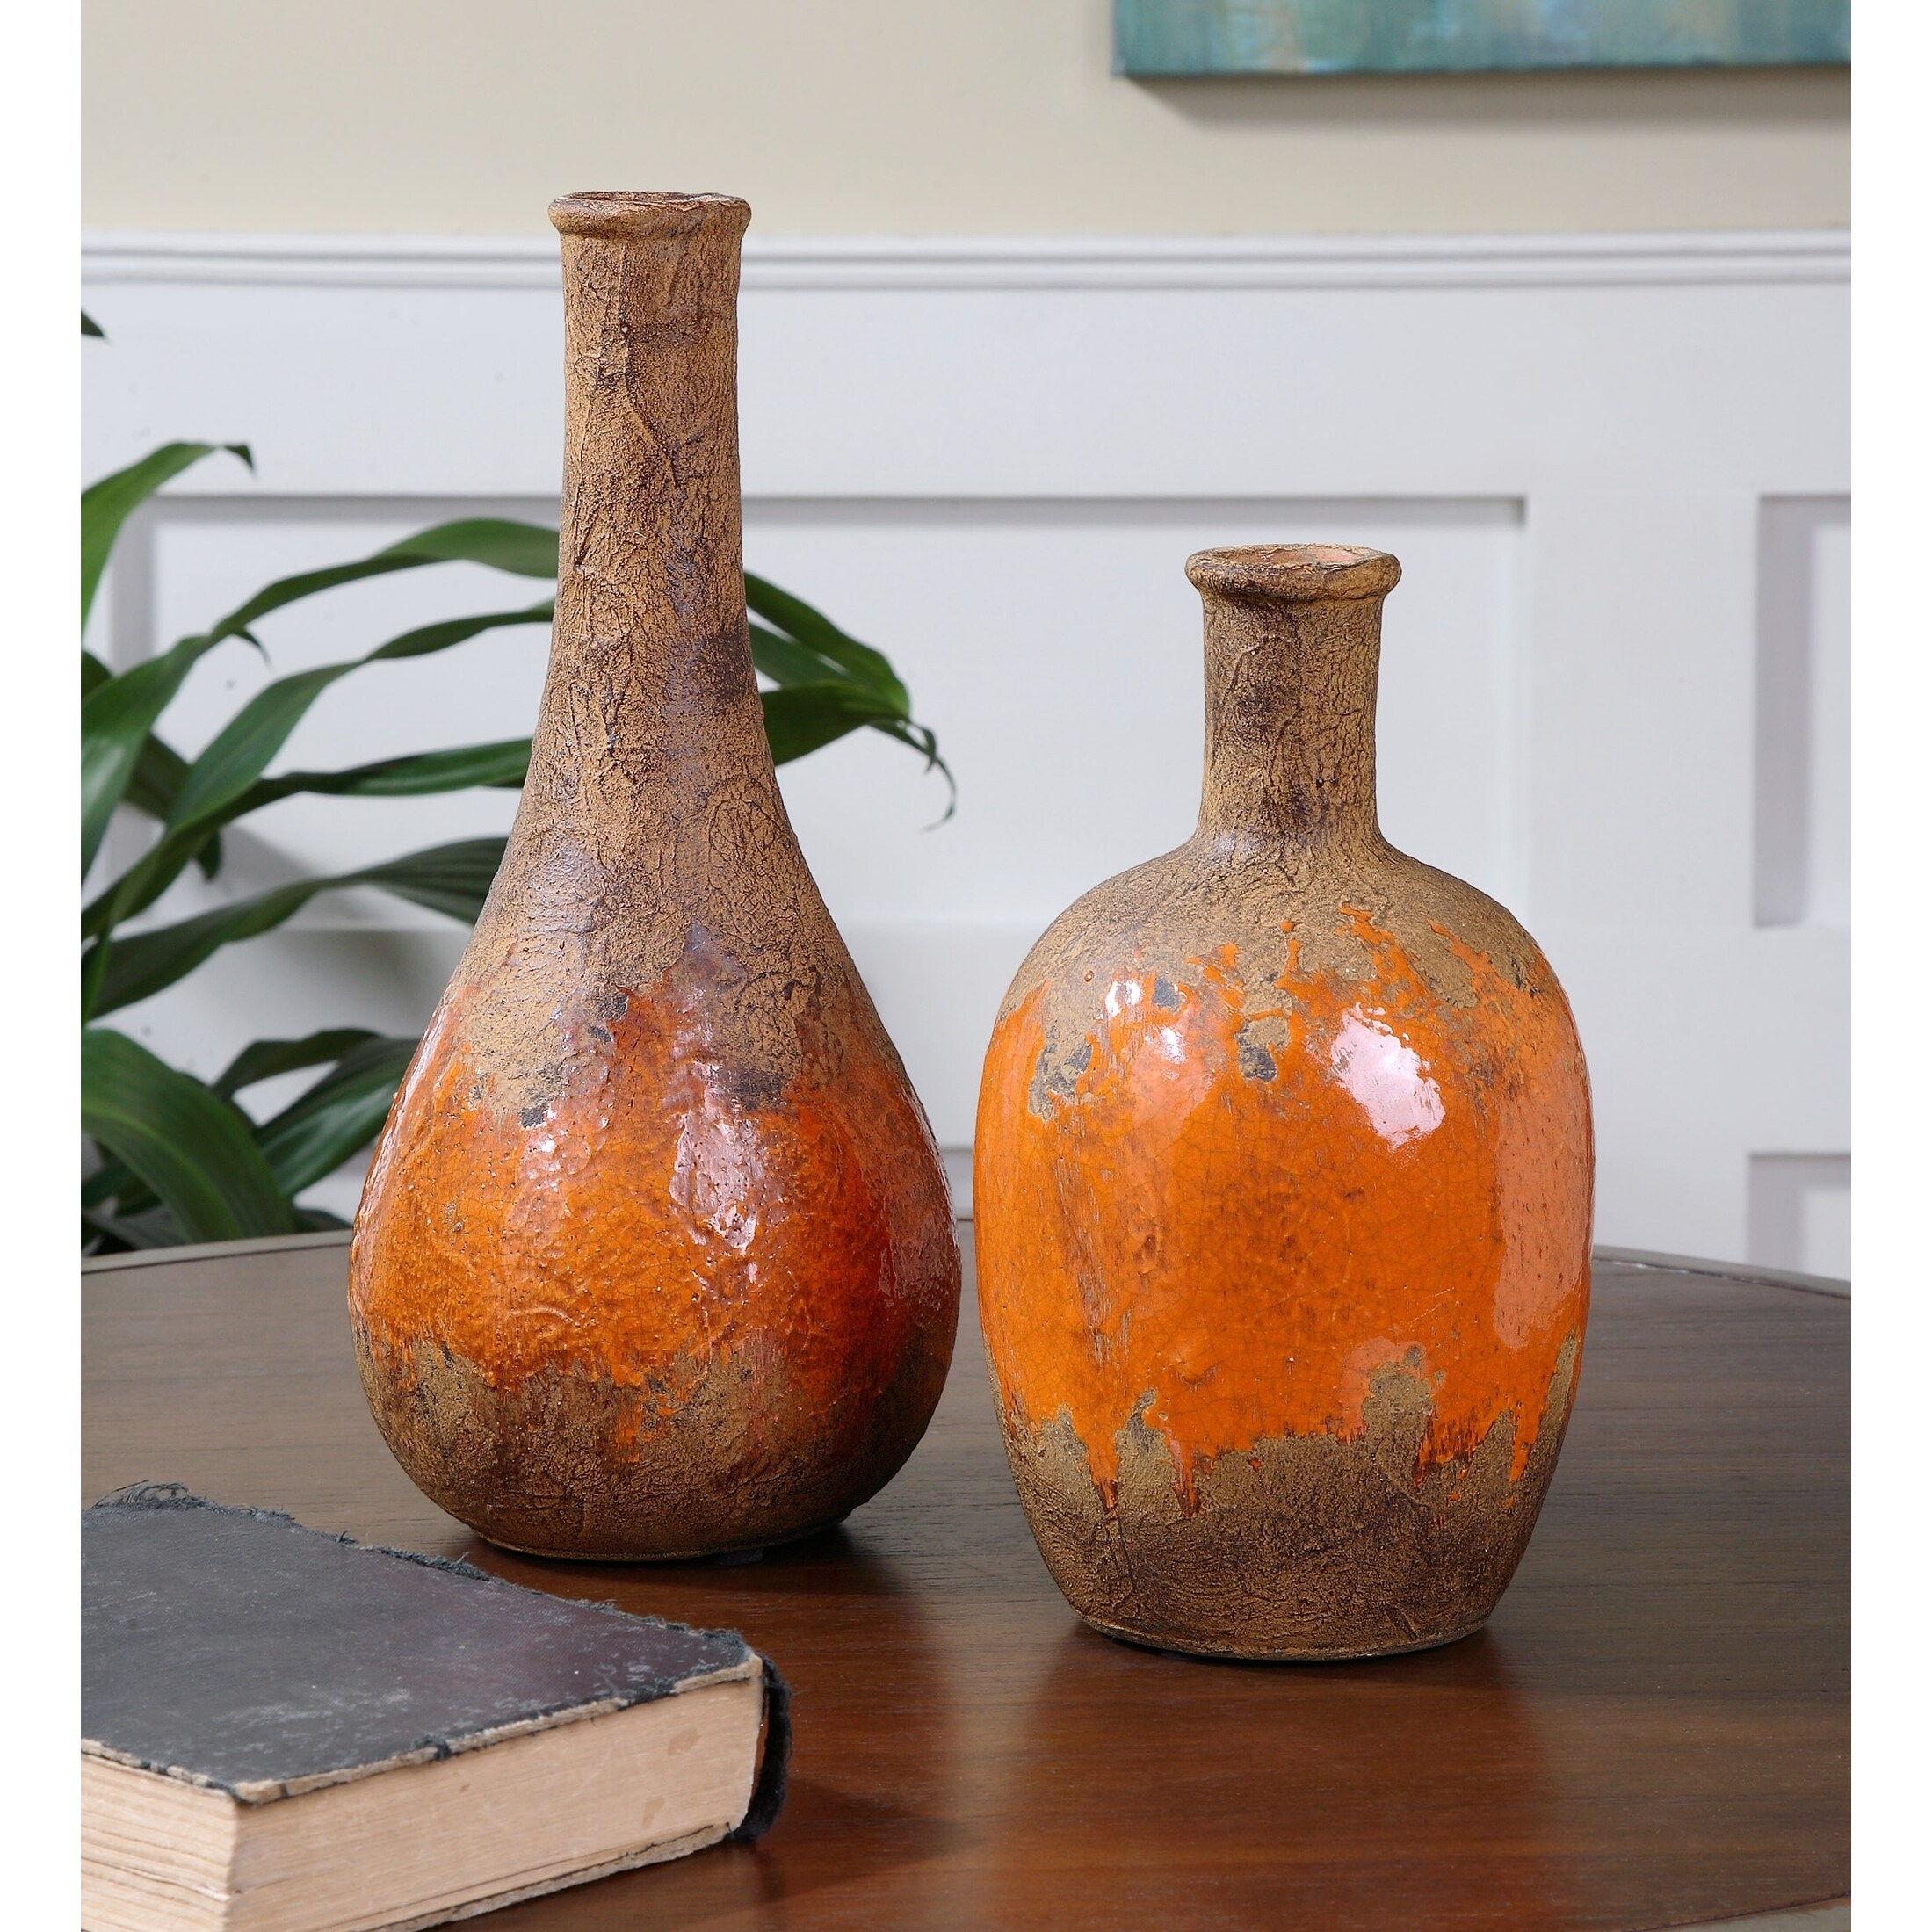 Ban.do Ceramic Vase - Stacked Citrus - 20814295